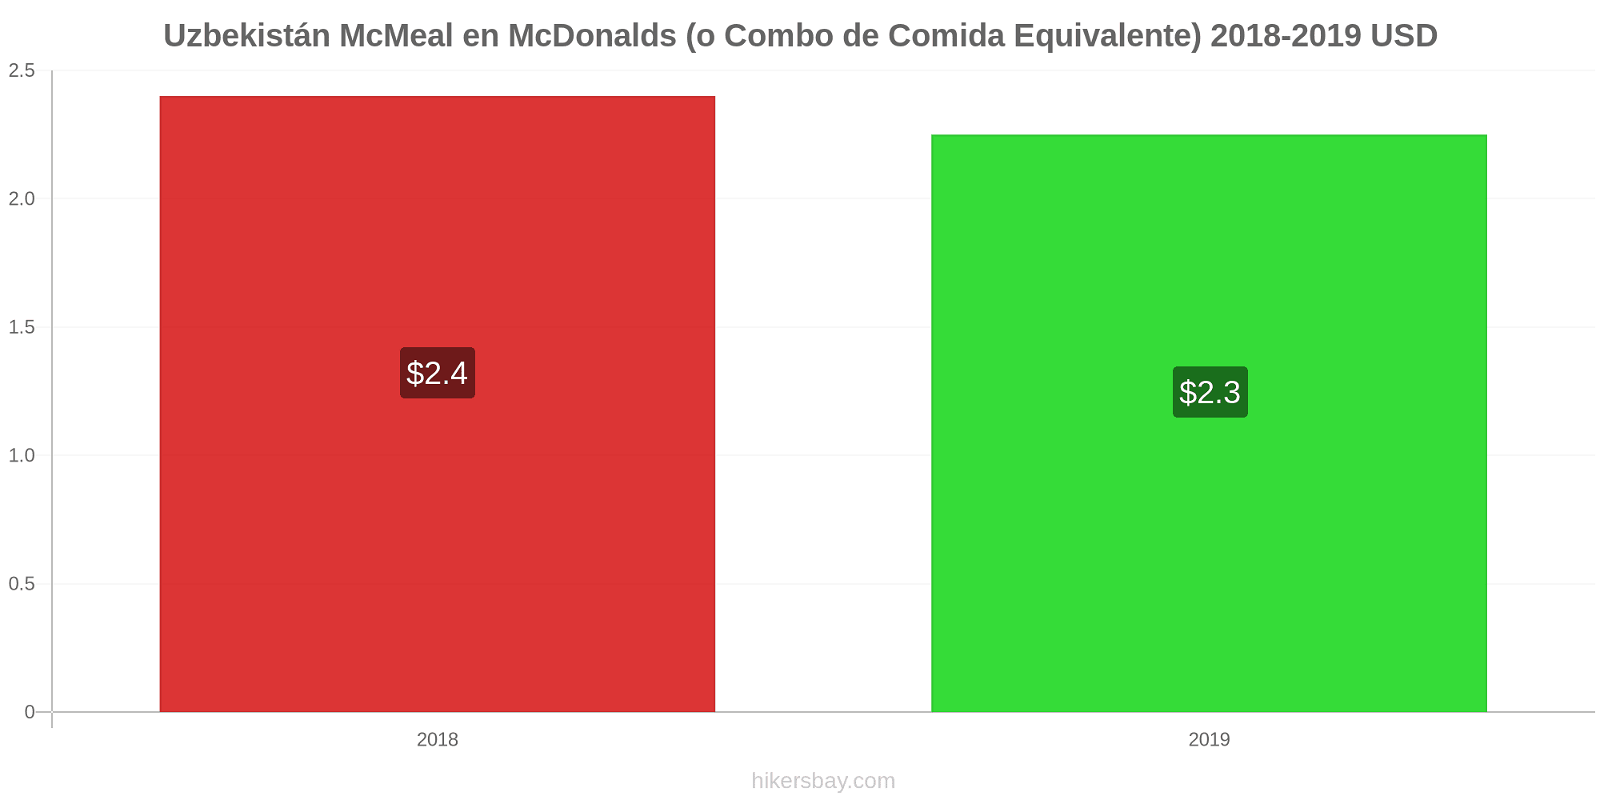 Uzbekistán cambios de precios McMeal en McDonalds (o menú equivalente) hikersbay.com